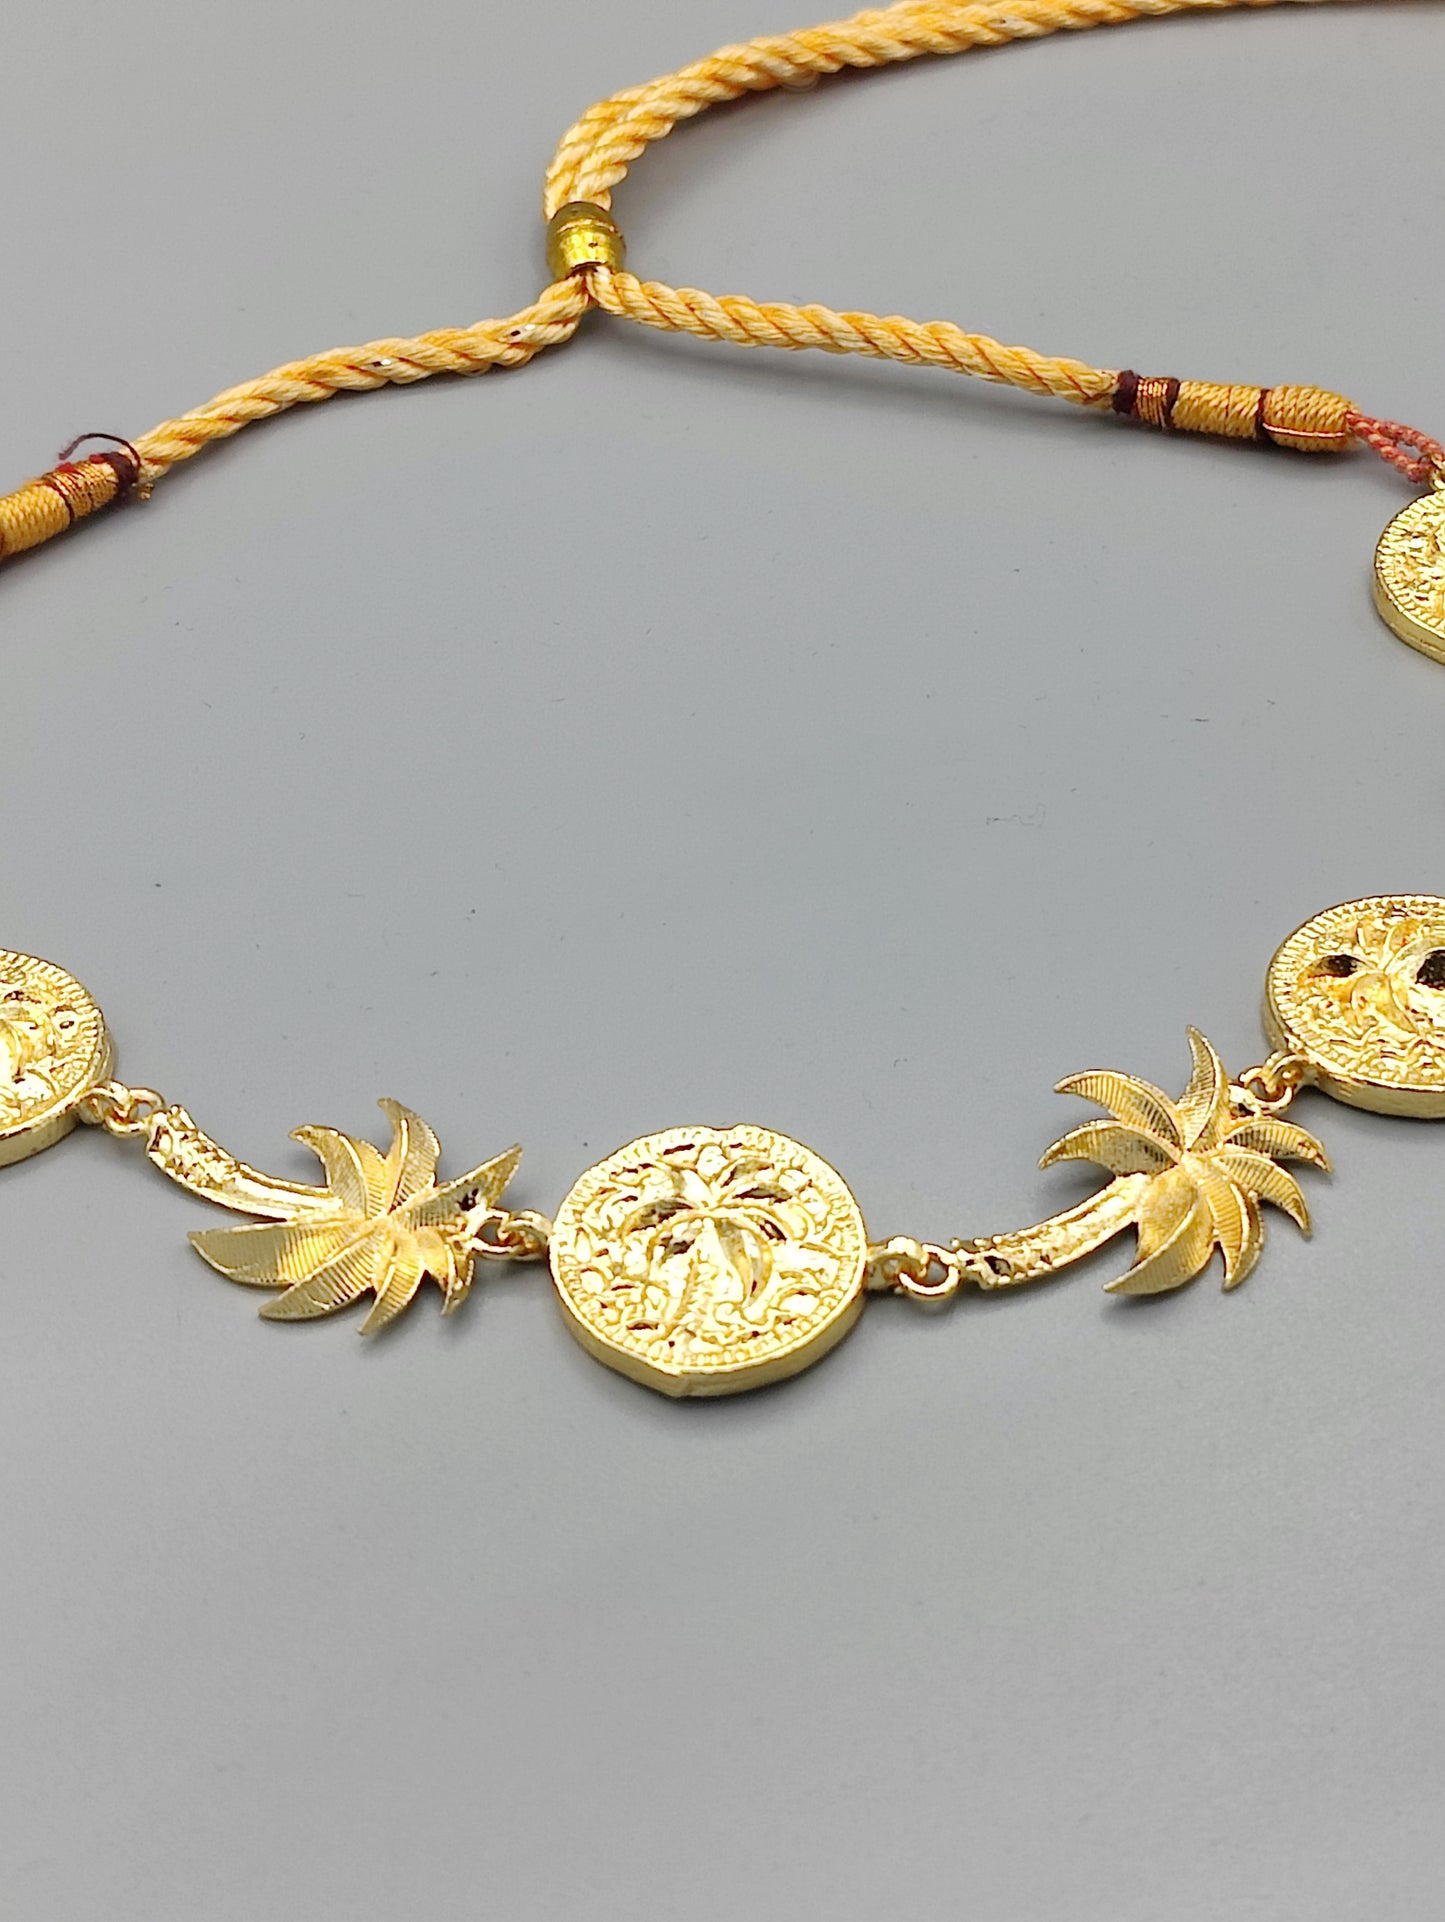 Golden Sunburst Necklace